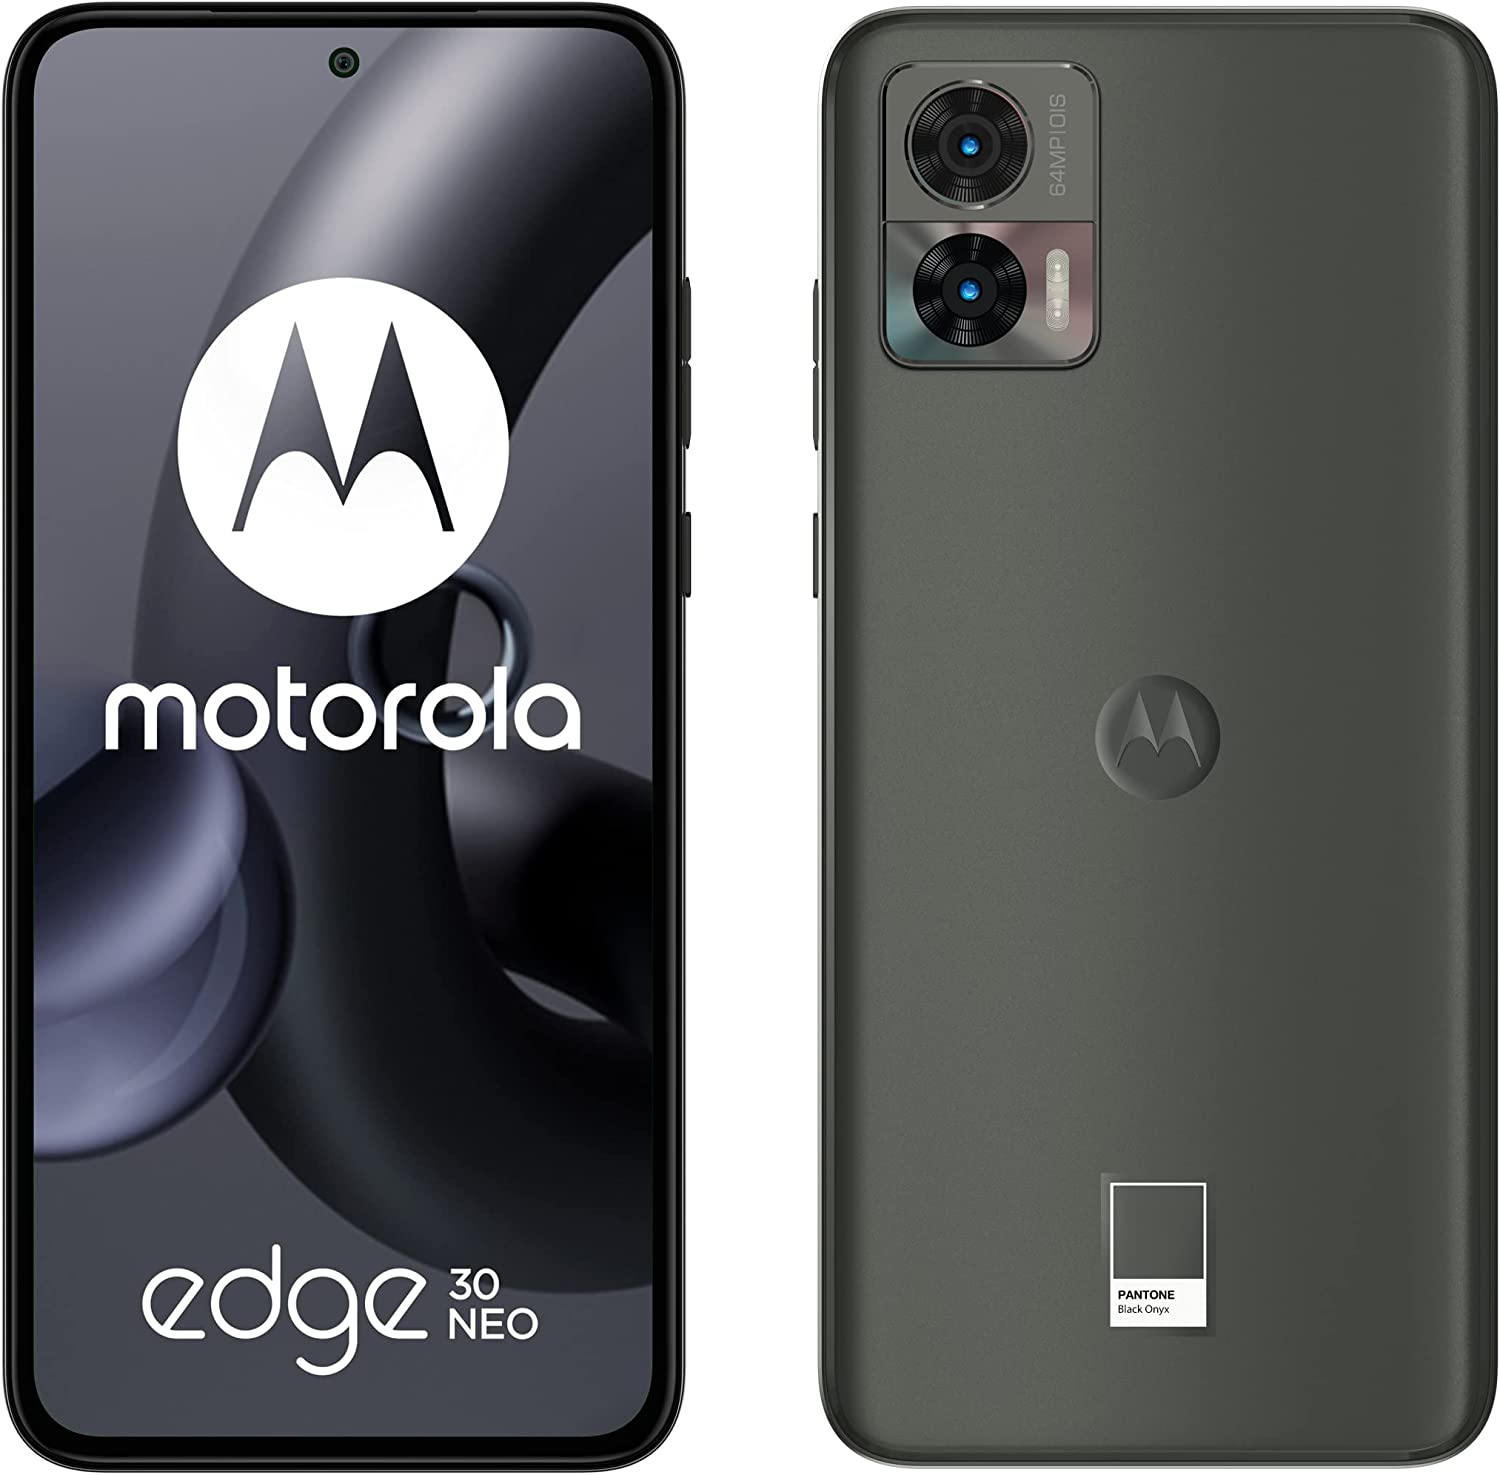 Product Support - Motorola motorola edge 30 neo - Motorola Support US